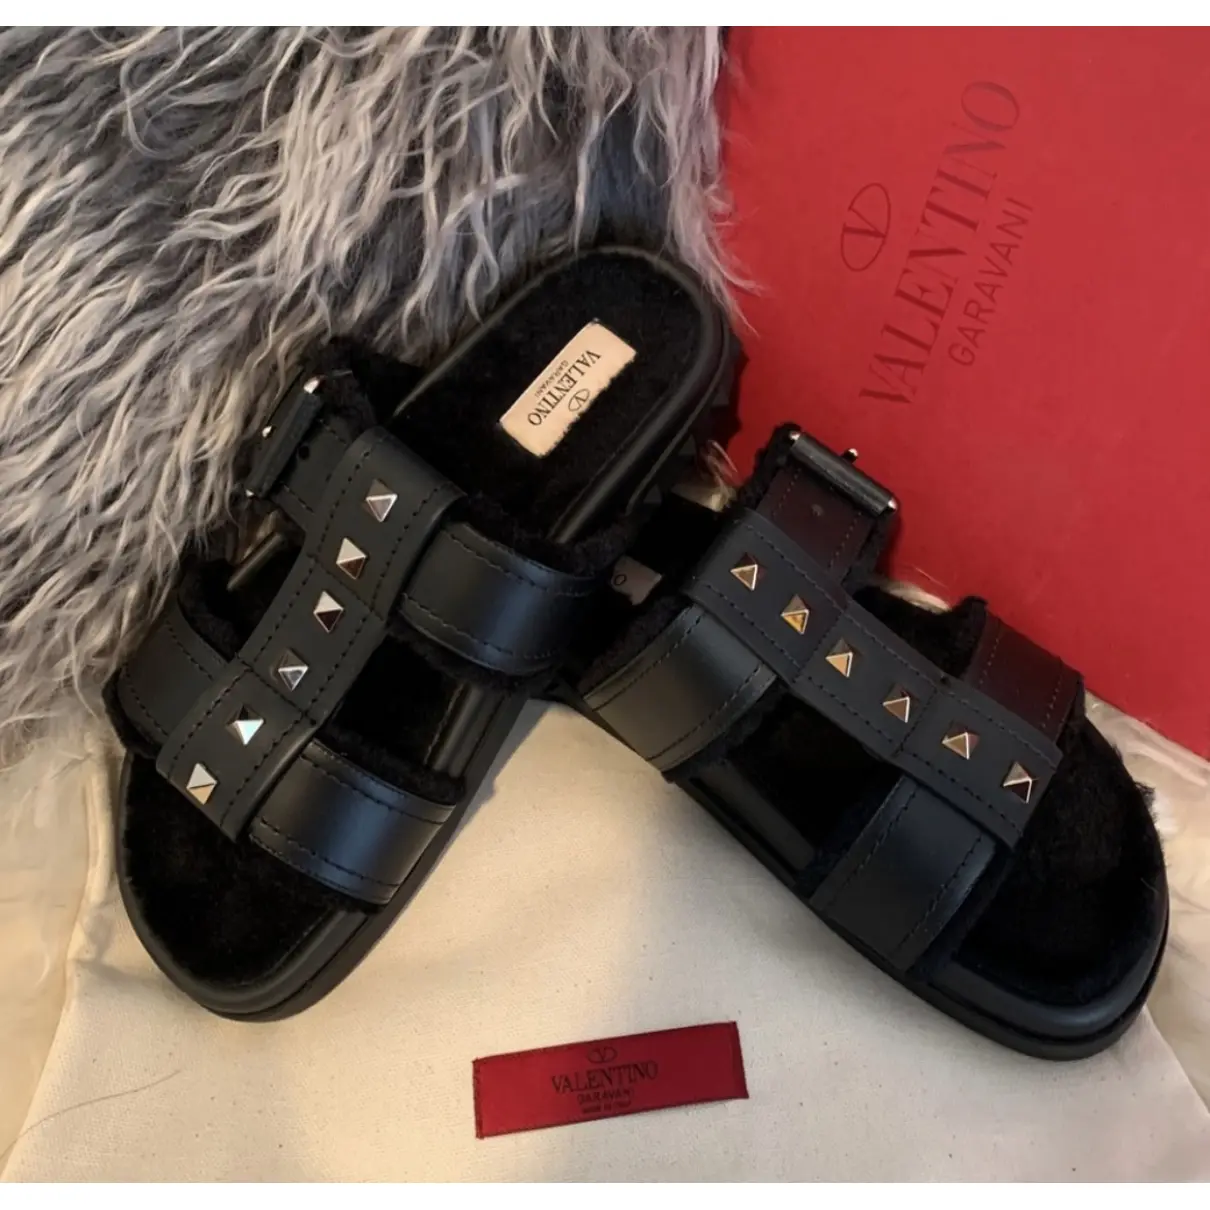 Buy Valentino Garavani Rockstud leather sandal online